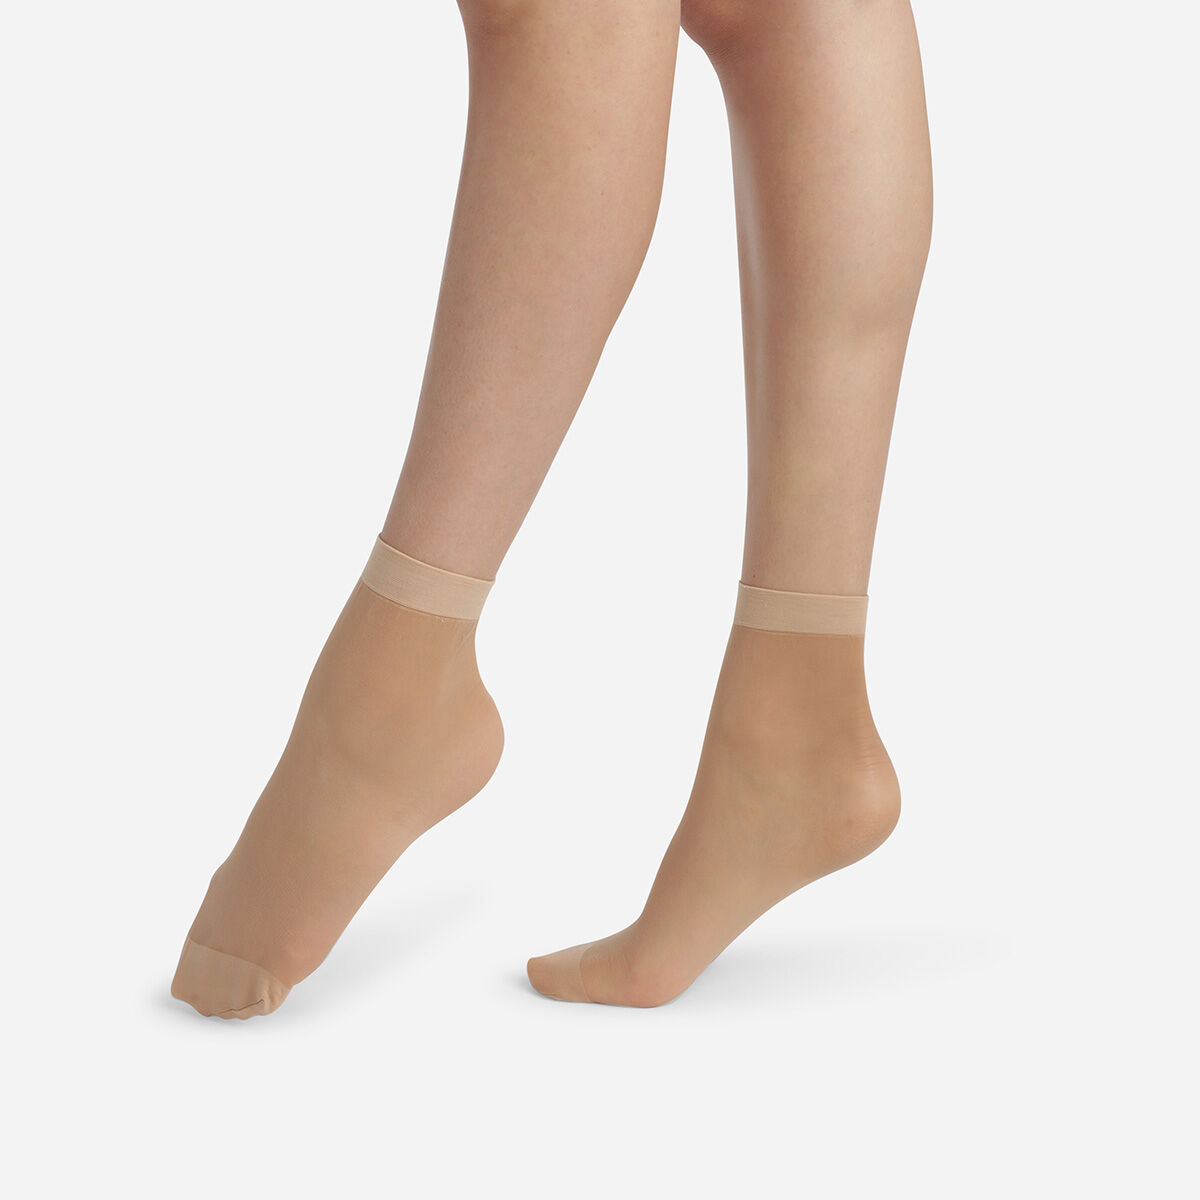 Warehouse Find Star Trek Classic Logo  Ladie's Knee Hight Socks Set of 2 Pair 